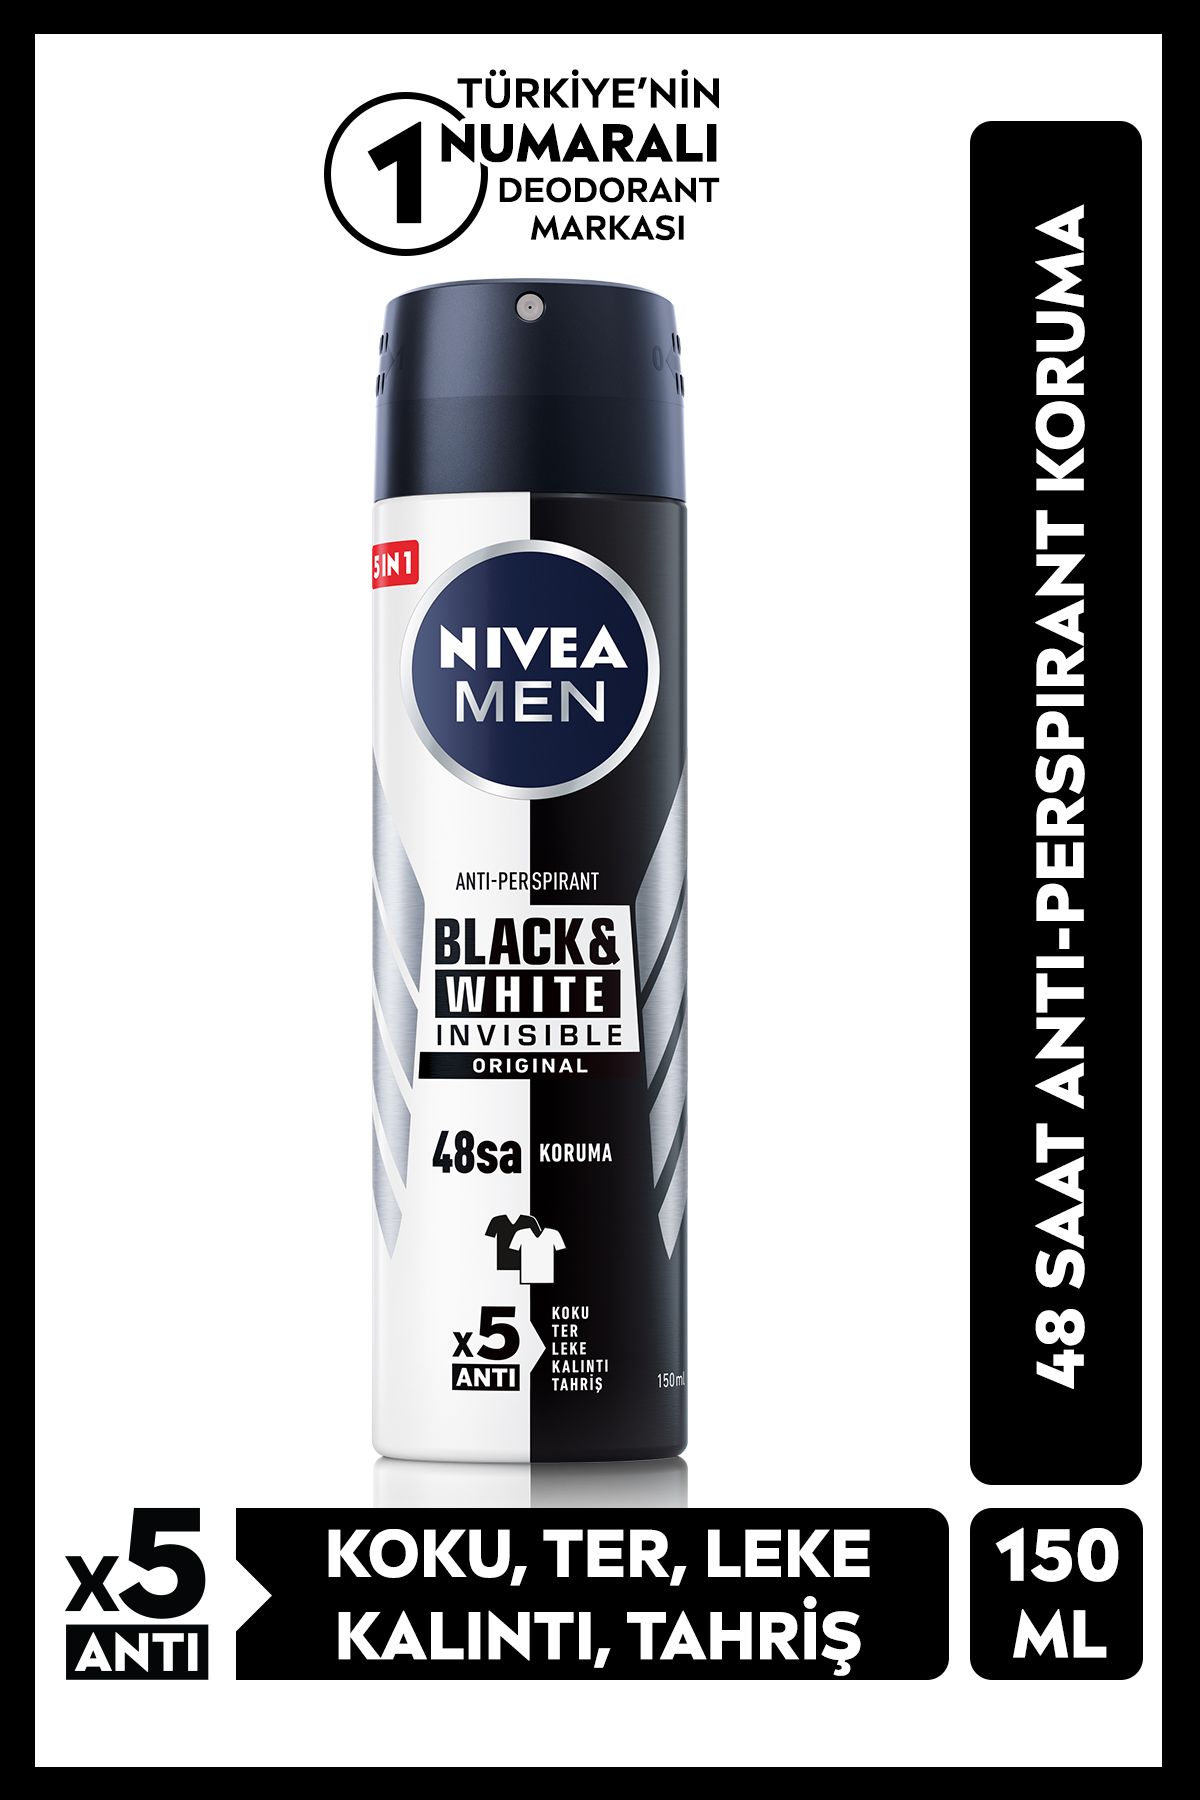 NIVEA MEN Erkek Sprey Deodorant Black&White Invisible Original 150ml, 48 Saat Ter Karşıtı, Erkeksi Koku